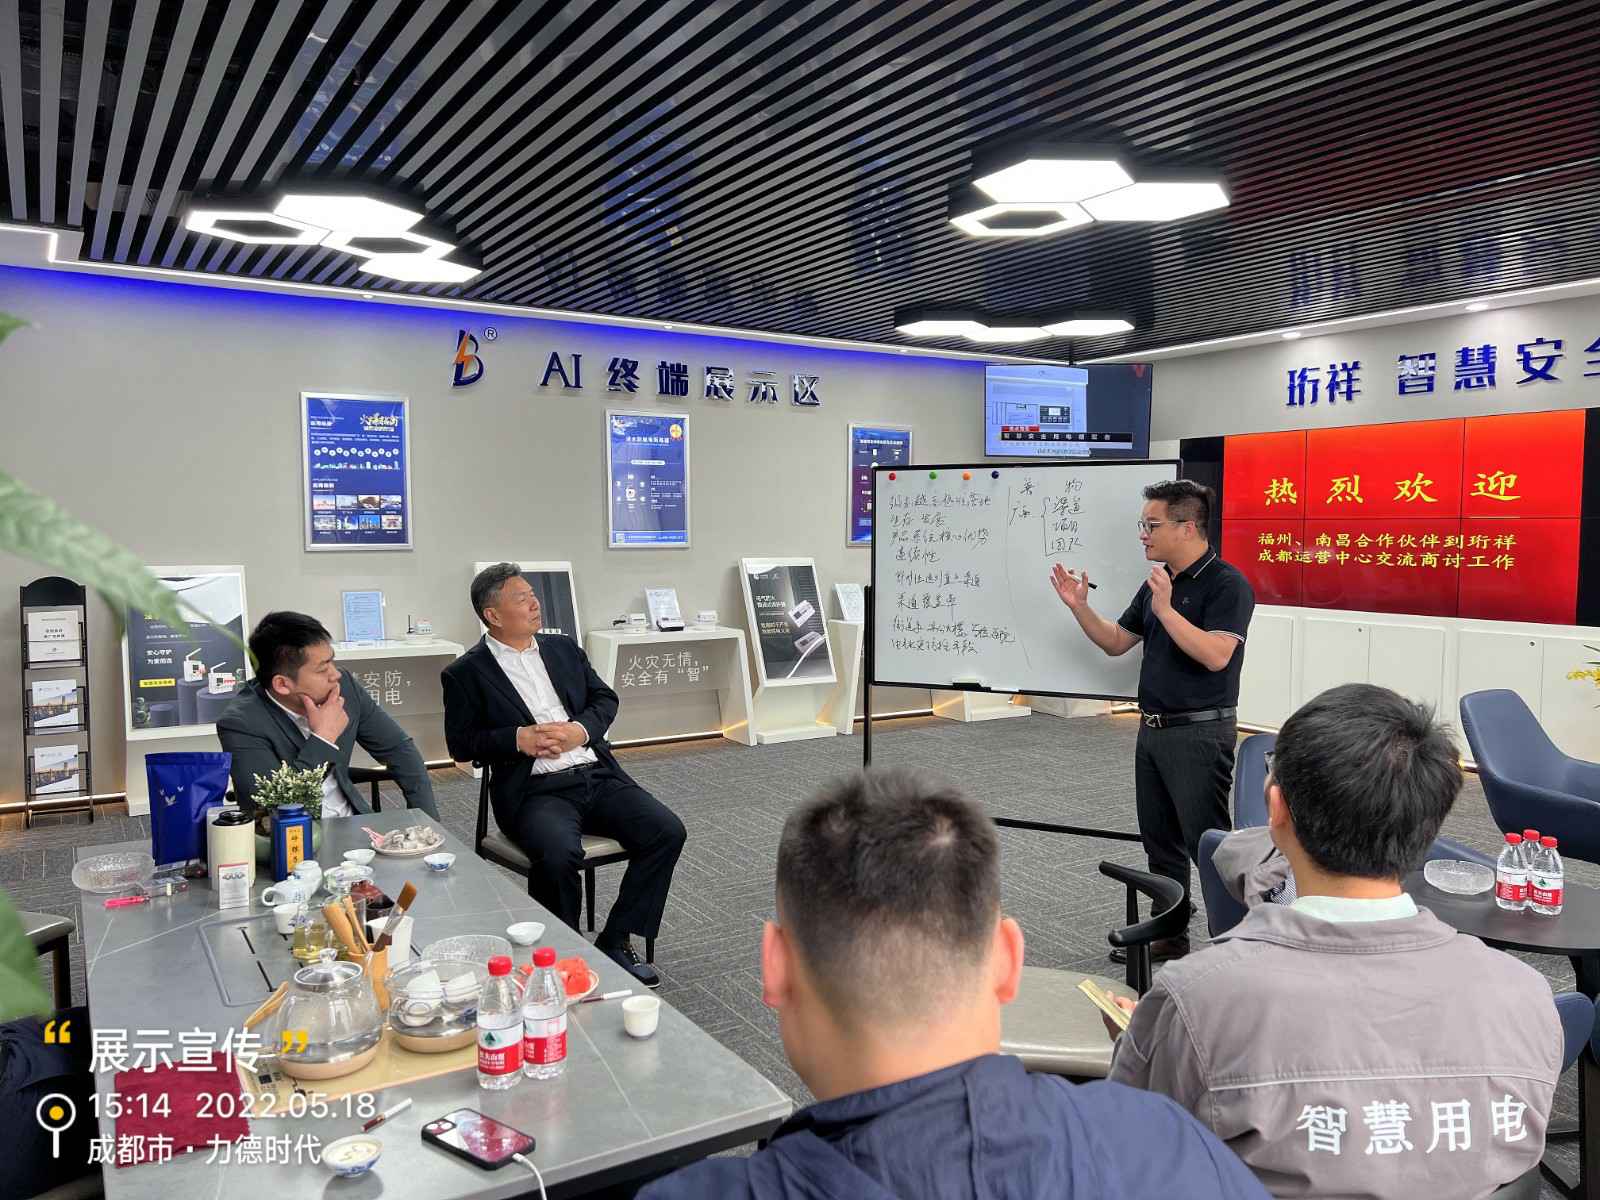 bet手机官网(上海)科技有限公司为中移铁通有限公司进行安全用电培训